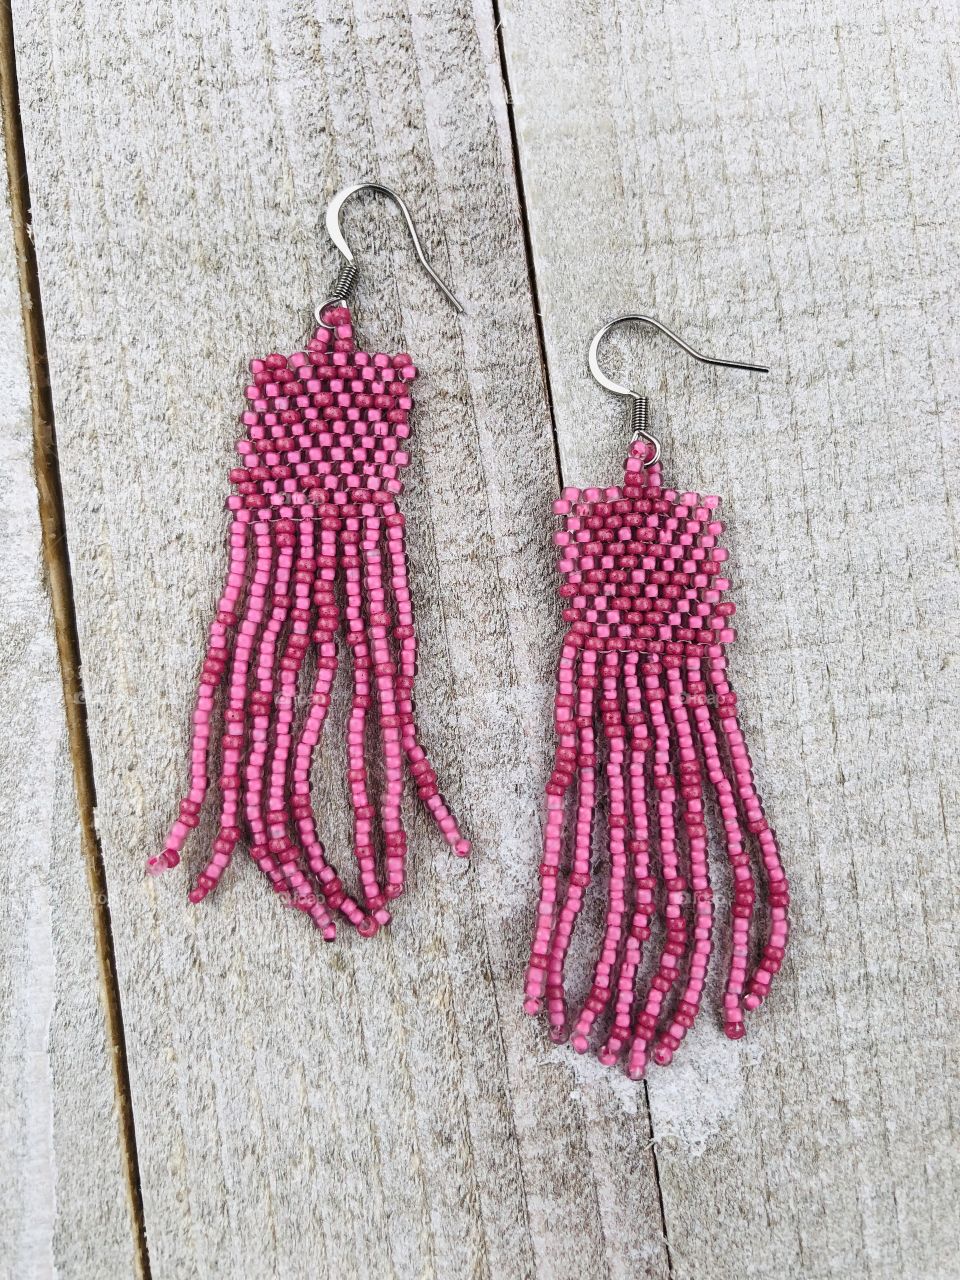 Peyote stitch pink seed bead fringe earrings